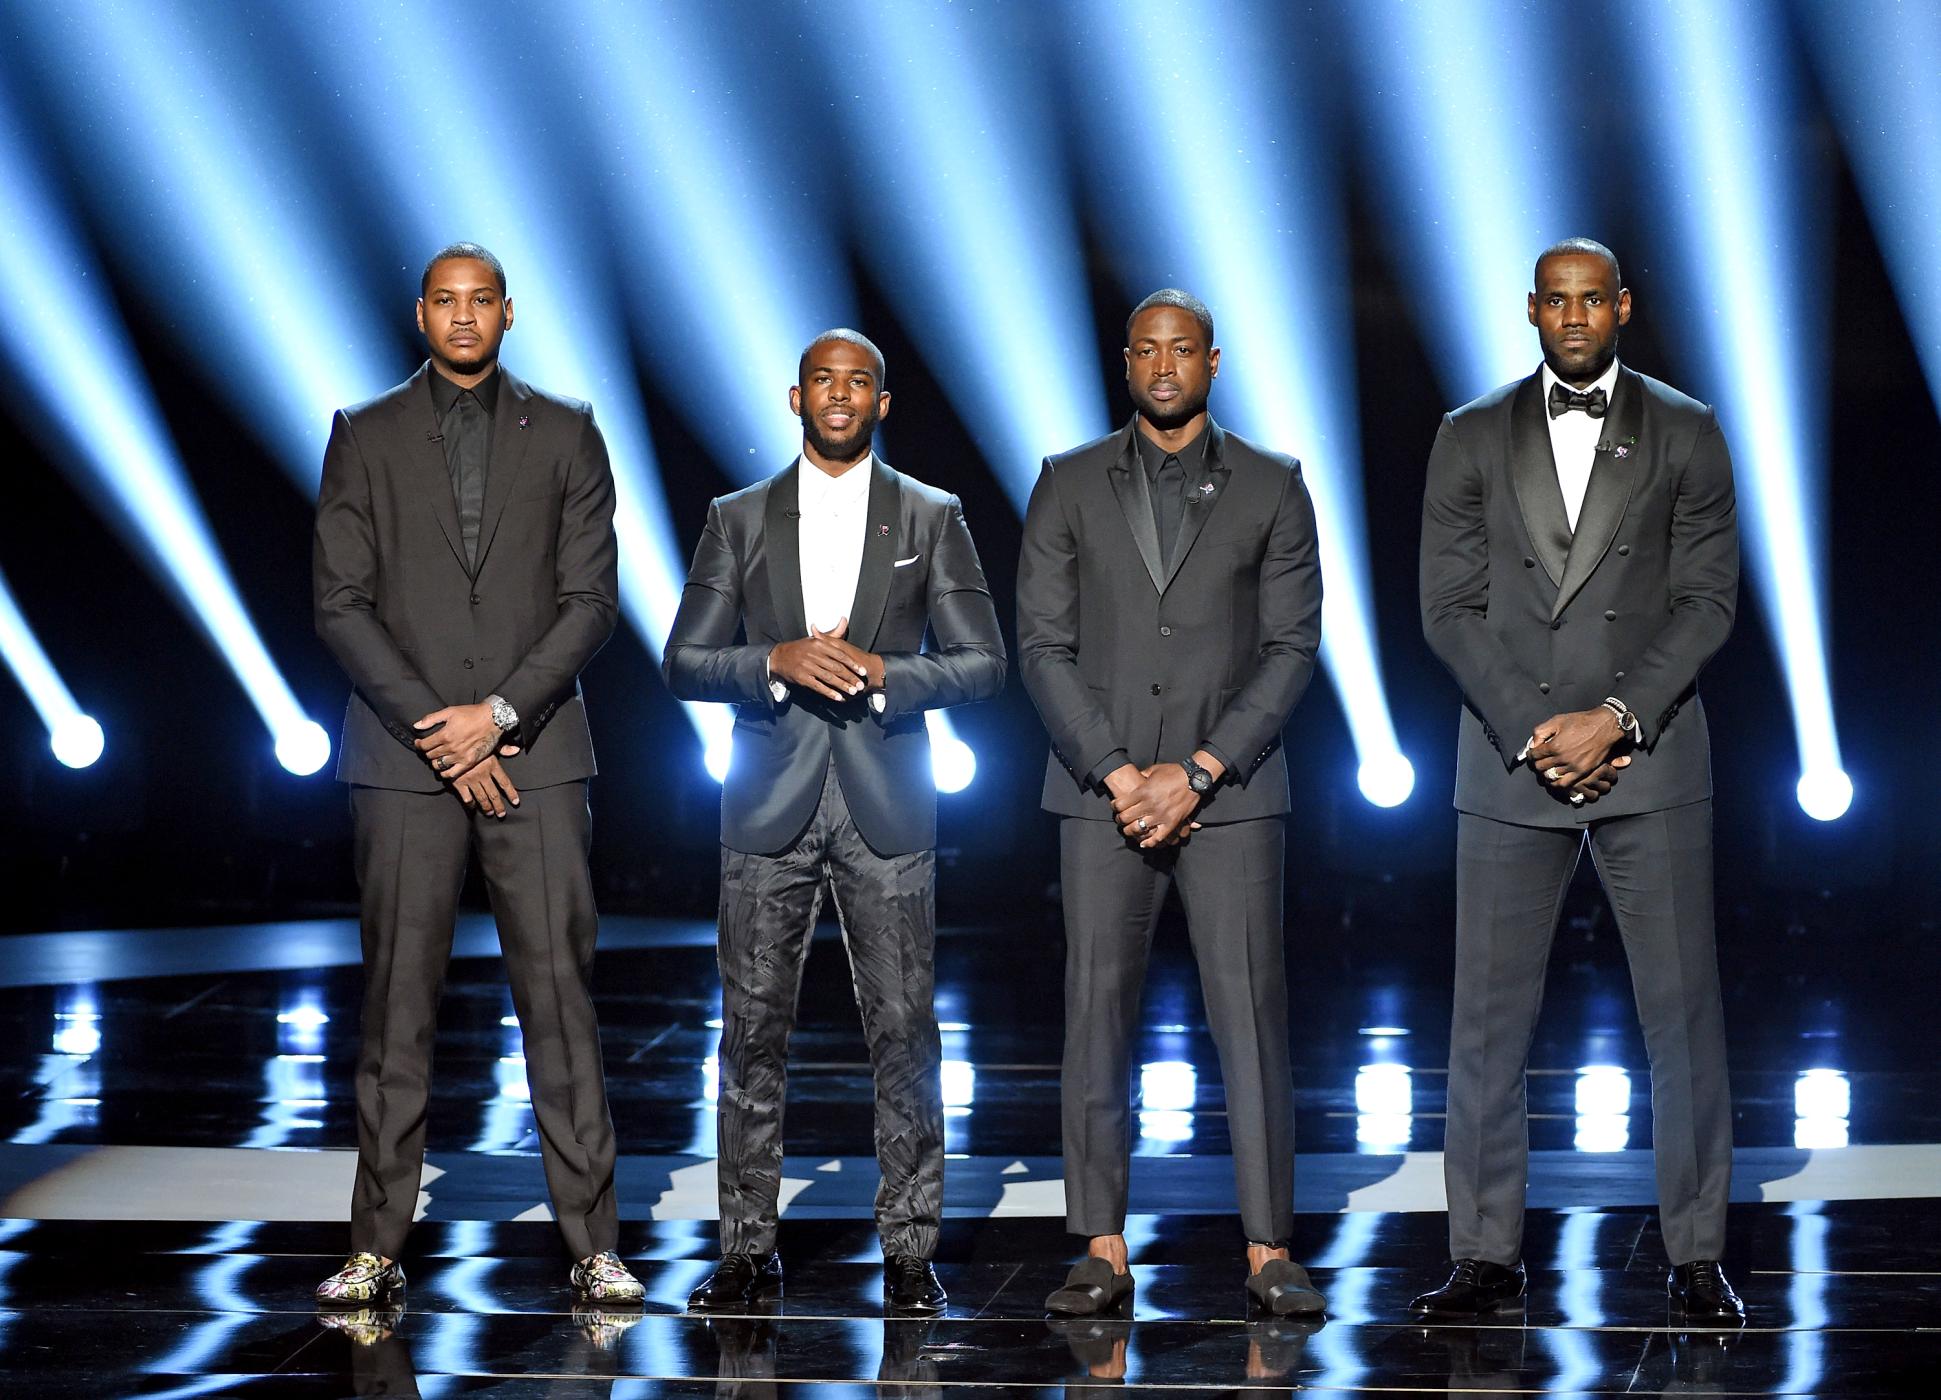 Carmelo Anthony, Chris Paul, Dwyane Wade and LeBron James